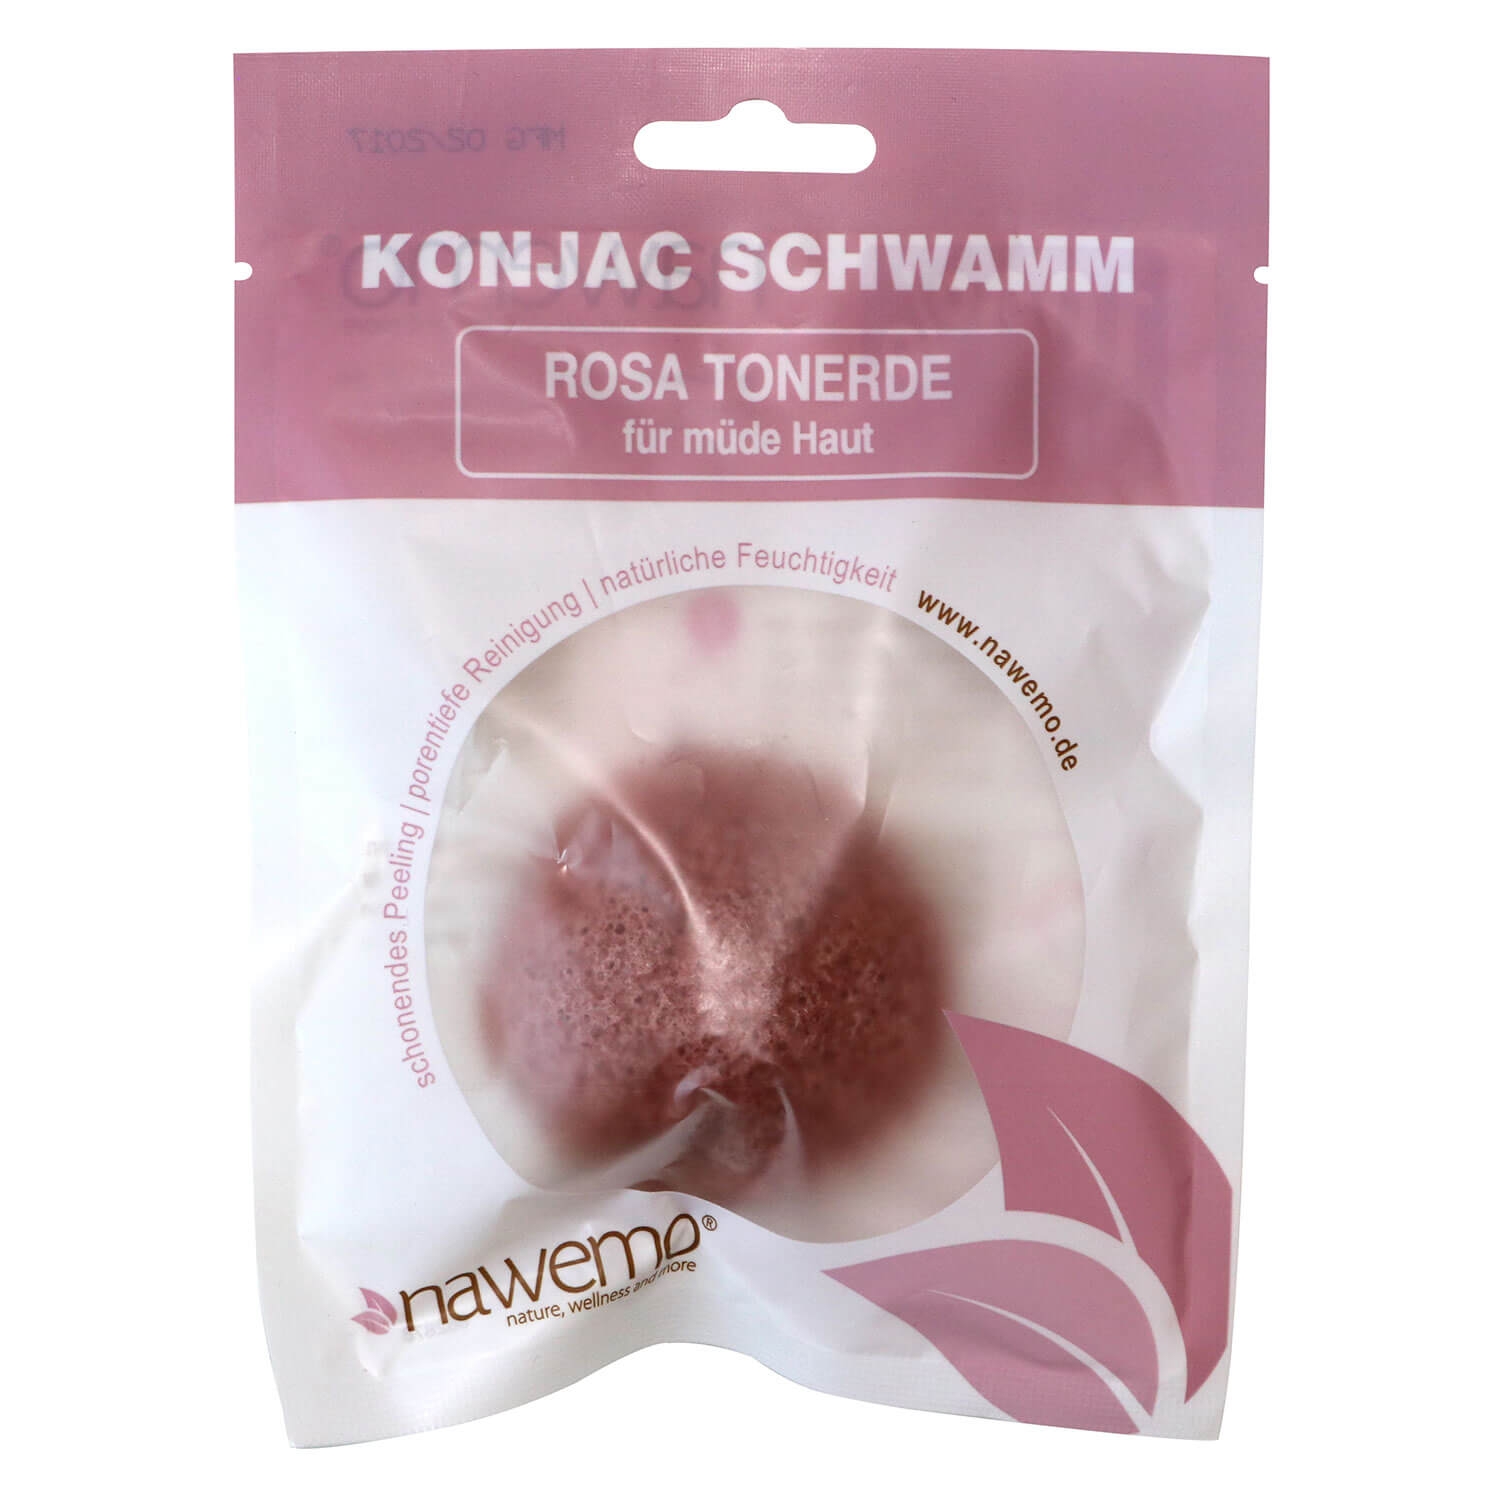 Product image from nawemo - Konjac Schwamm ROSA TONERDE